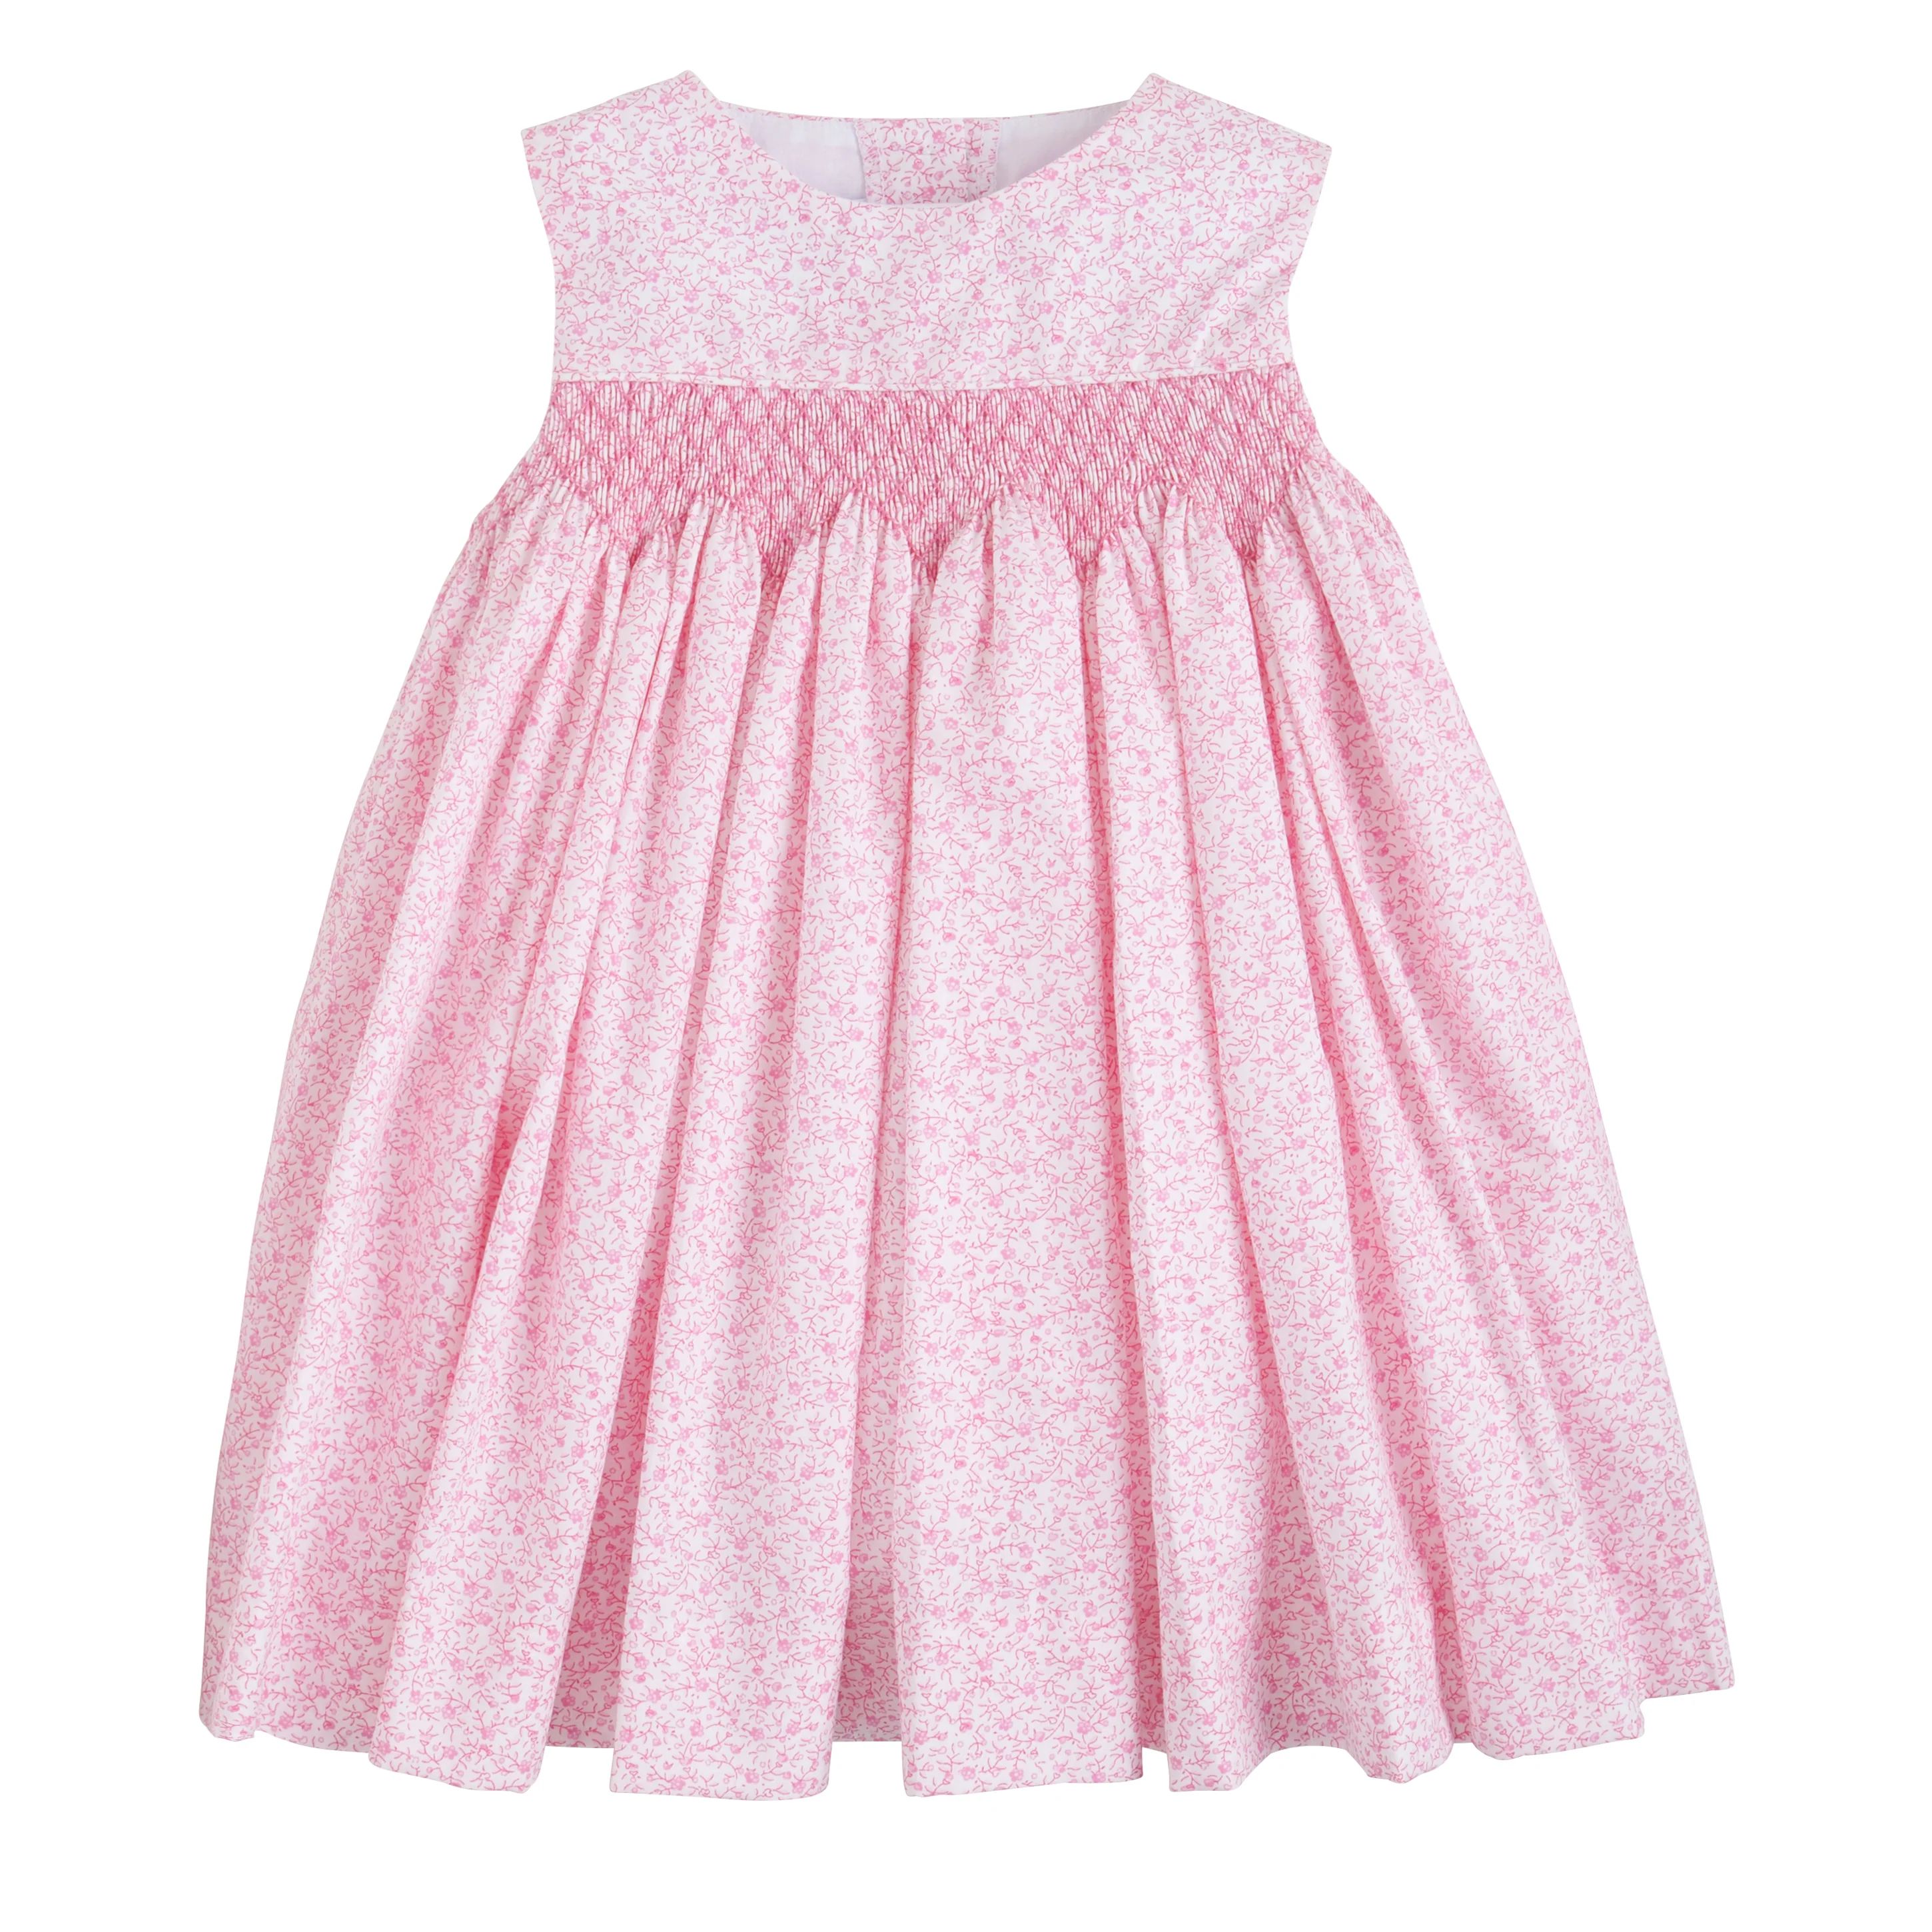 Simply Smocked Dress - Pink Vinings | Little English